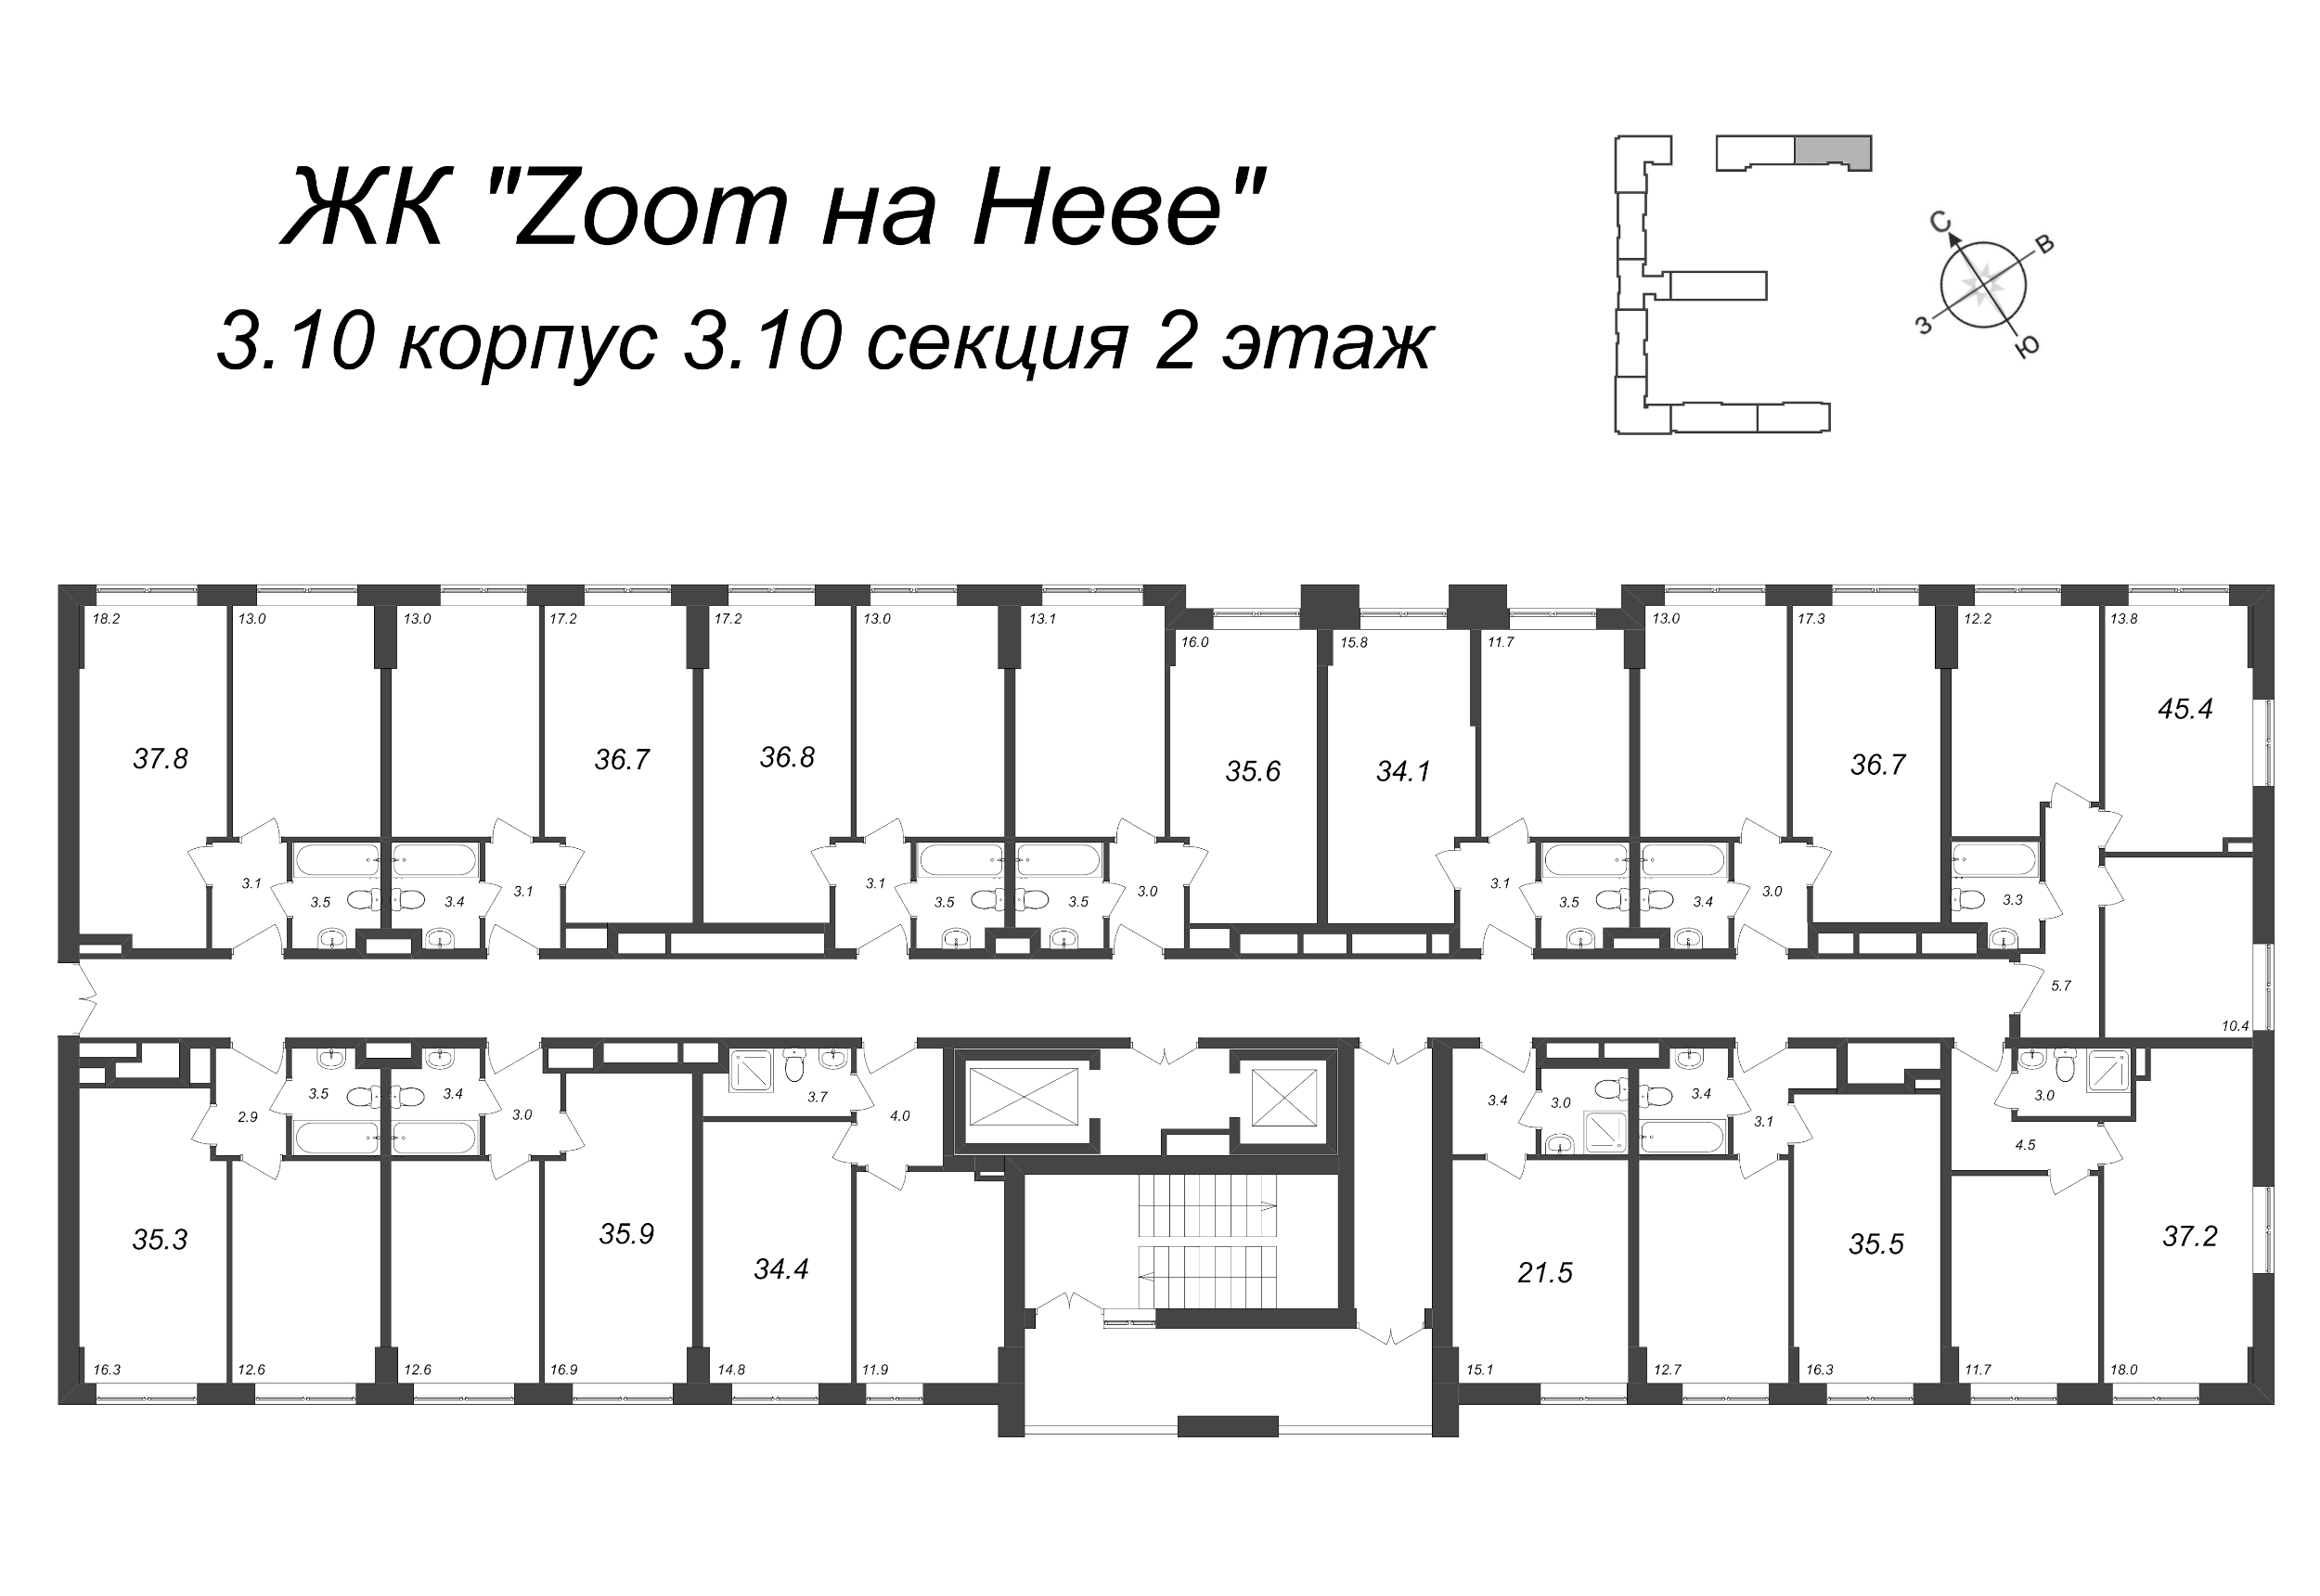 2-комнатная (Евро) квартира, 37.41 м² - планировка этажа